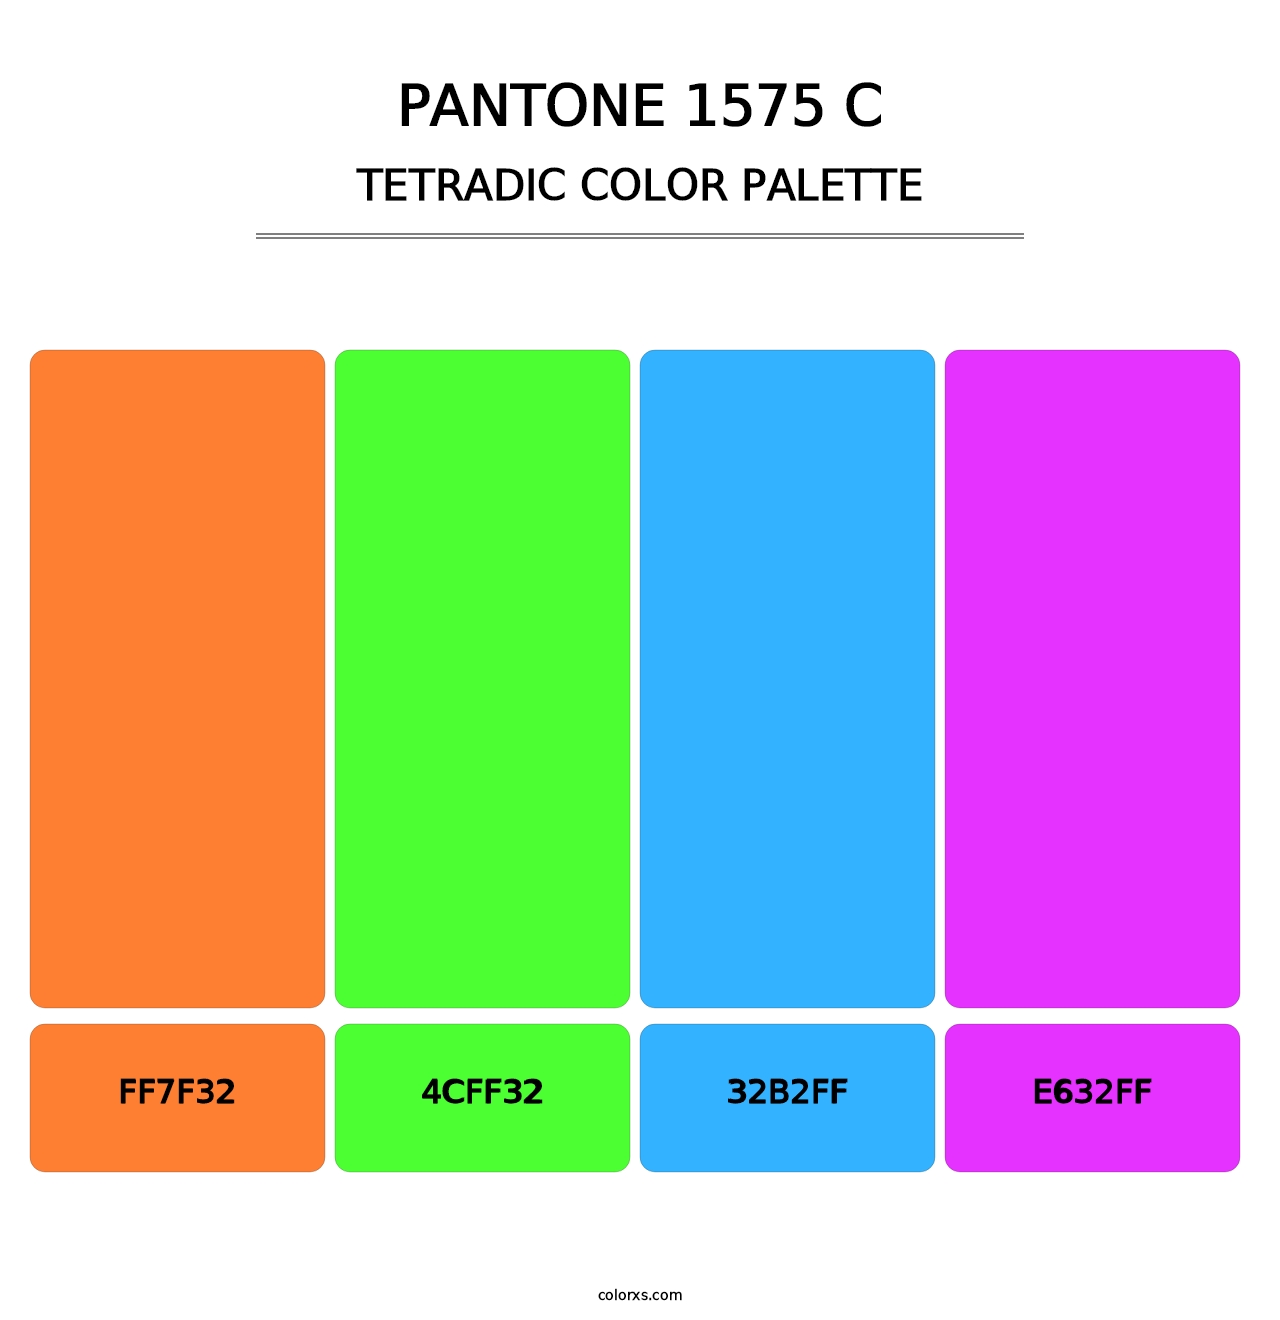 PANTONE 1575 C - Tetradic Color Palette